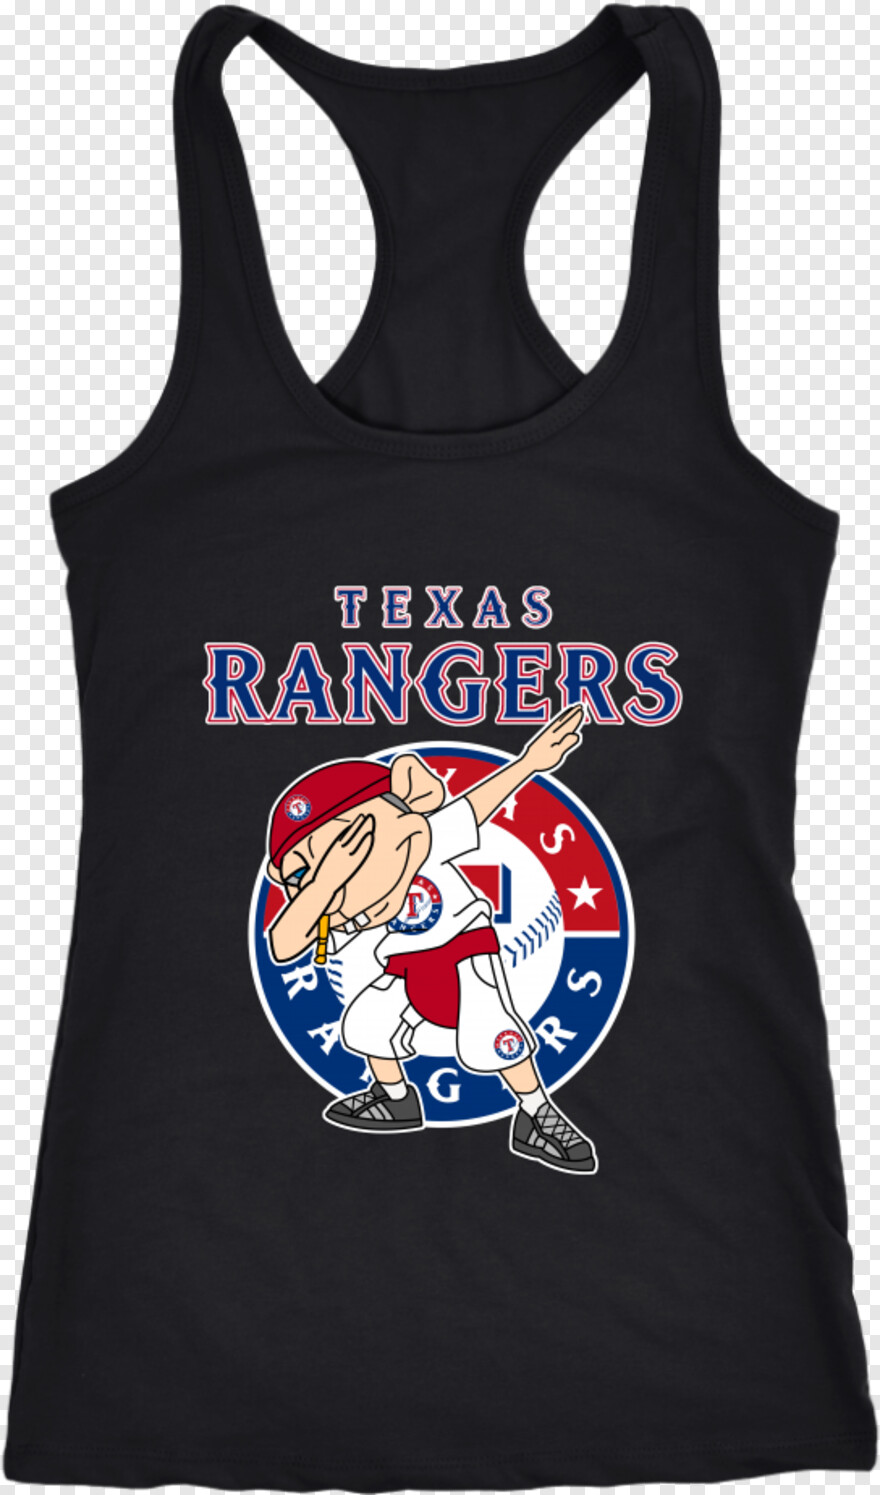 texas-rangers-logo # 398933